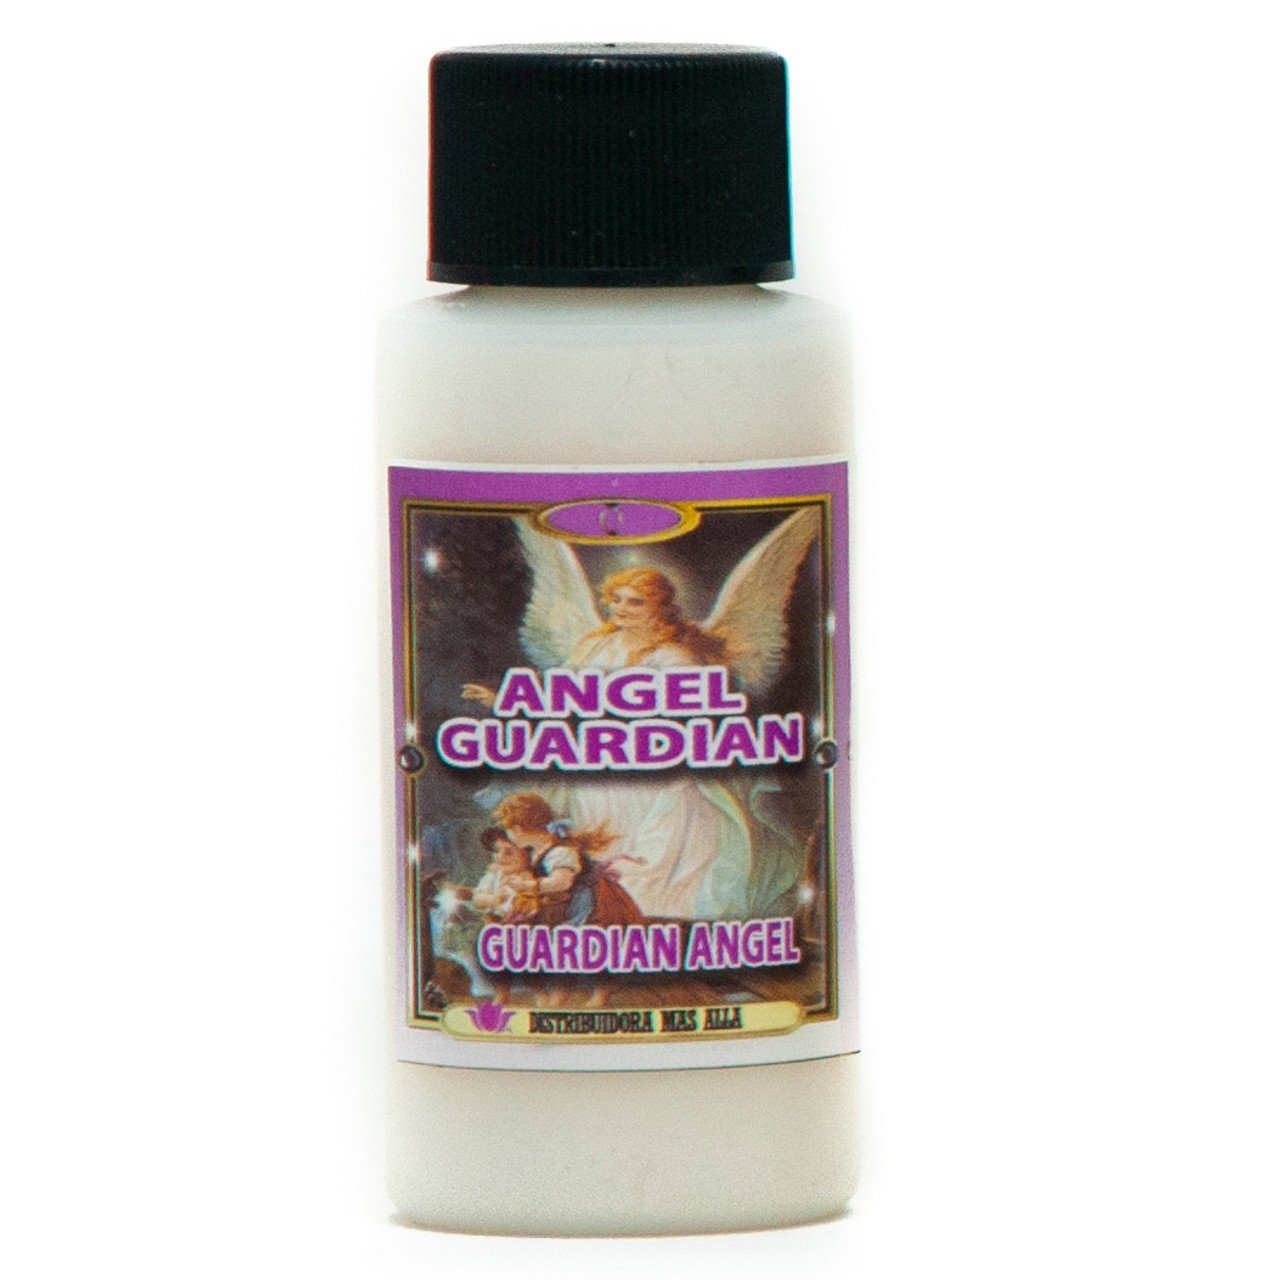 Polvo Angel Guardian - Guardian Angel Powder For Spells -